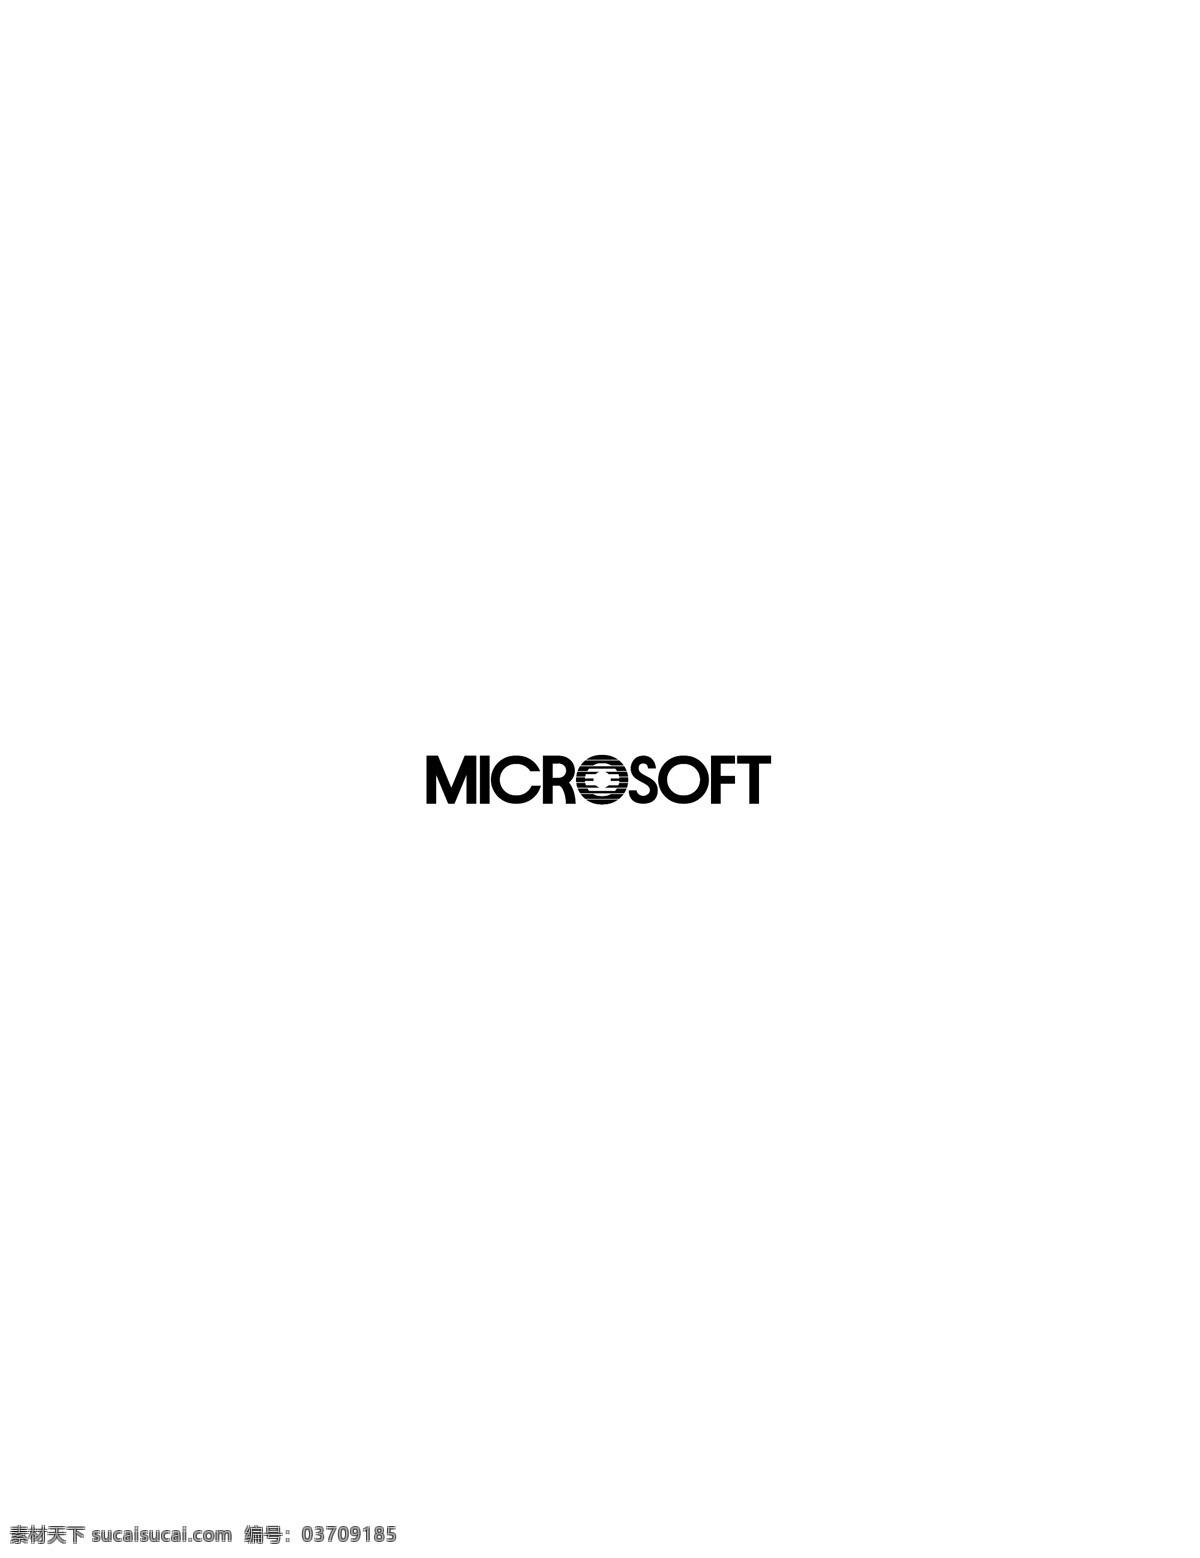 logo大全 logo 设计欣赏 microsoft 商业矢量 矢量下载 硬件 公司 标志设计 欣赏 网页矢量 矢量图 其他矢量图